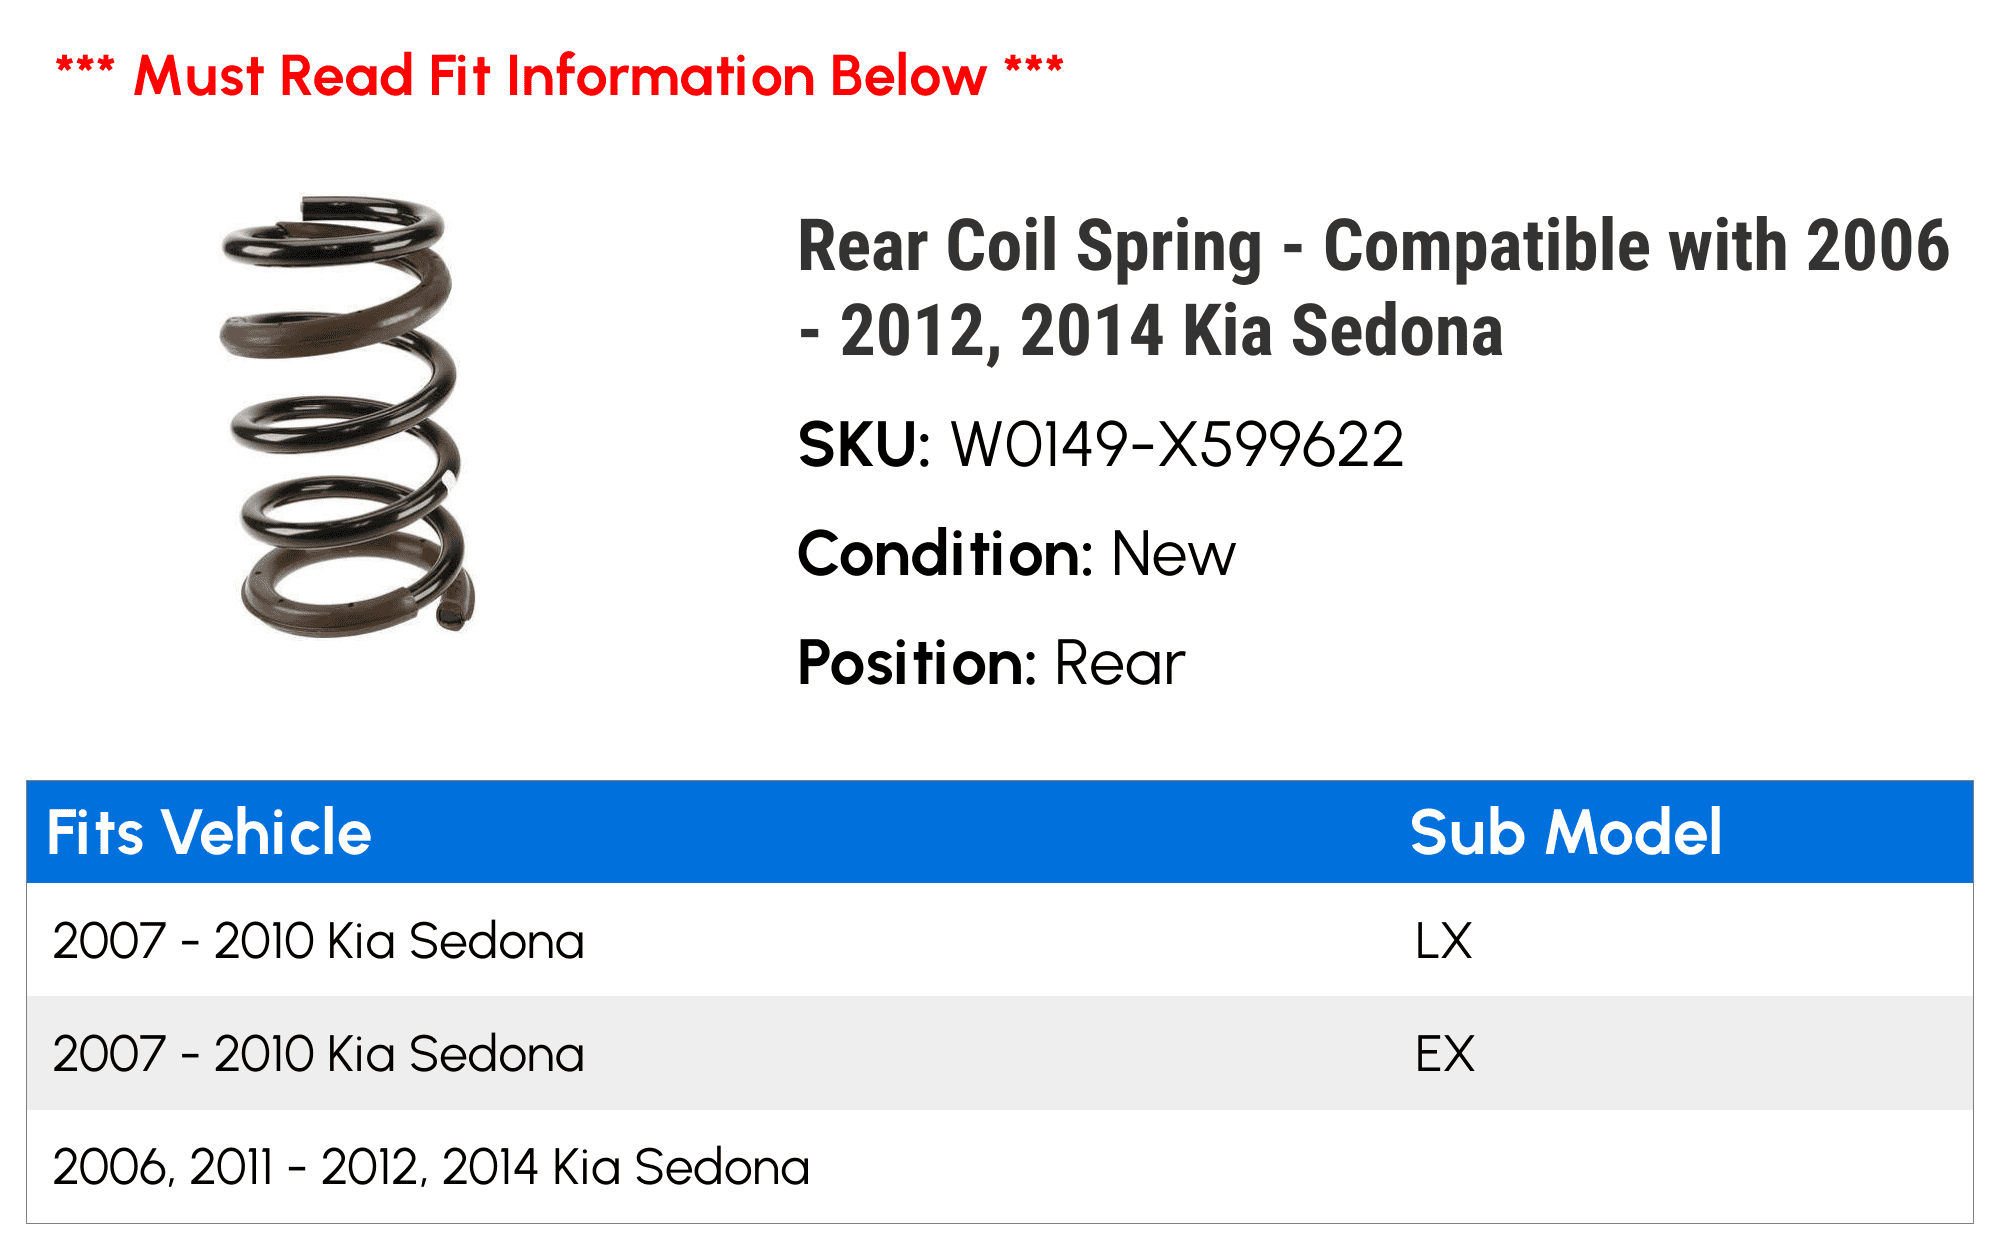 Rear Coil Spring 2014 Kia Sedona Compatible with 2006-2012 